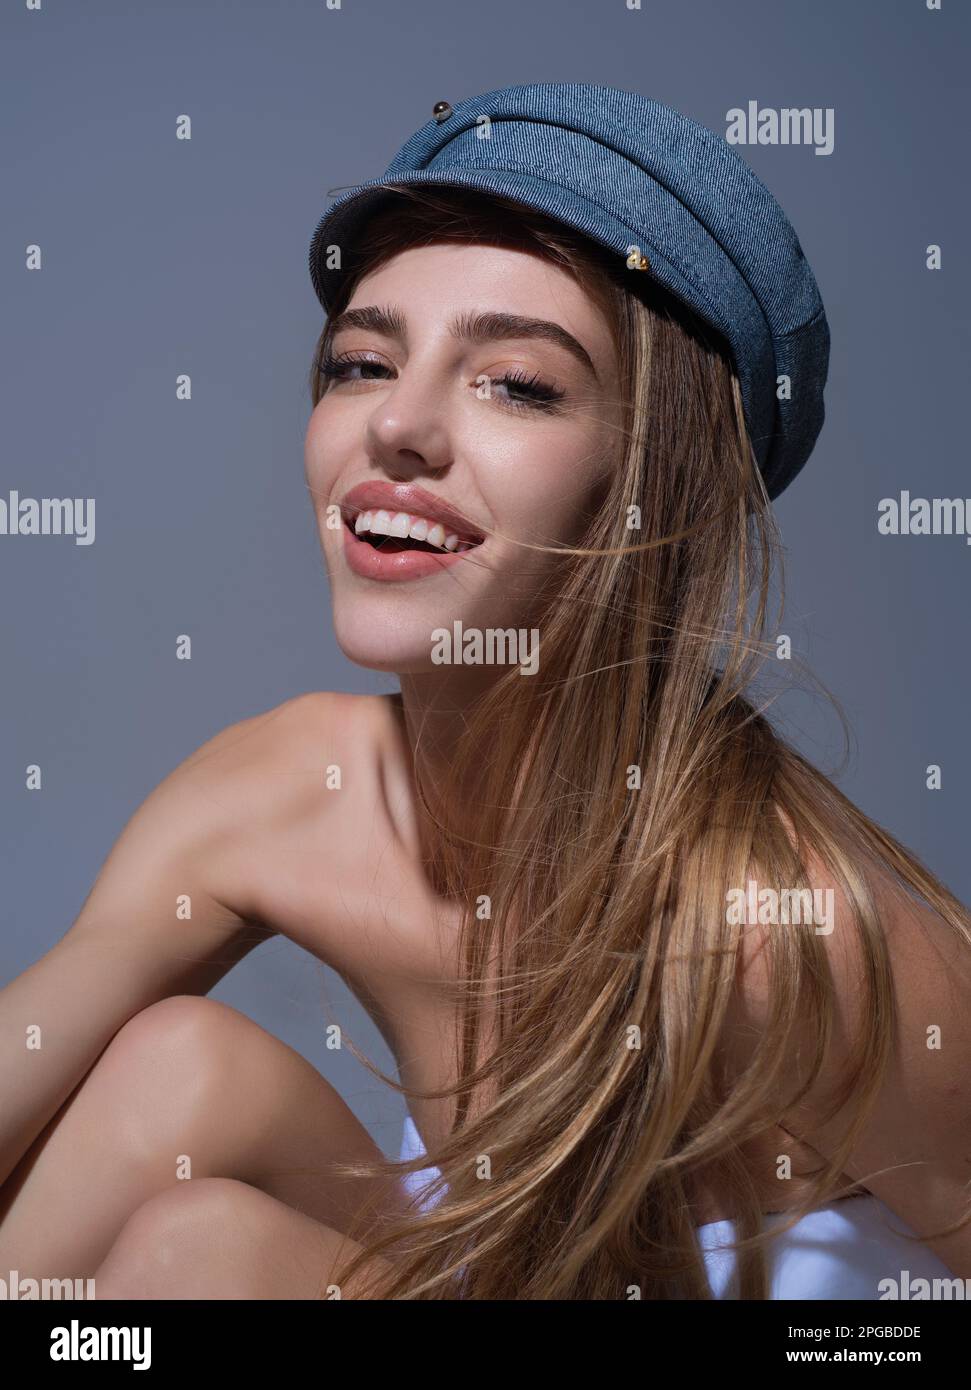 Beautiful sensual young woman in fashion cap hat, close up studio portrait. Beautiful model, sexy girl face. Fashion and beauty. Stock Photo